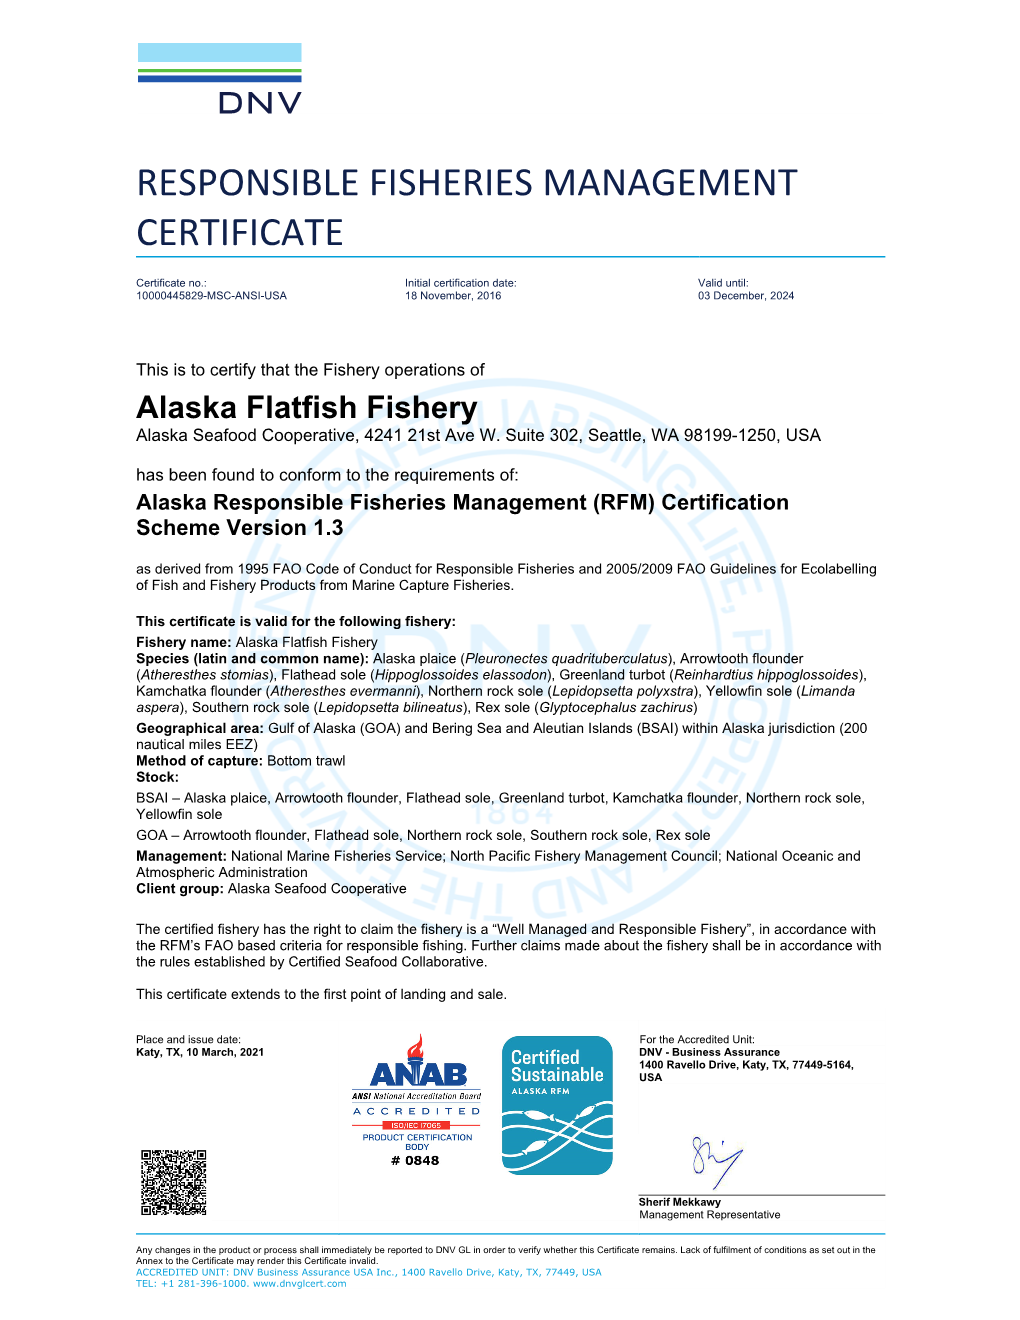 Alaska Flatfish RFM Certificate